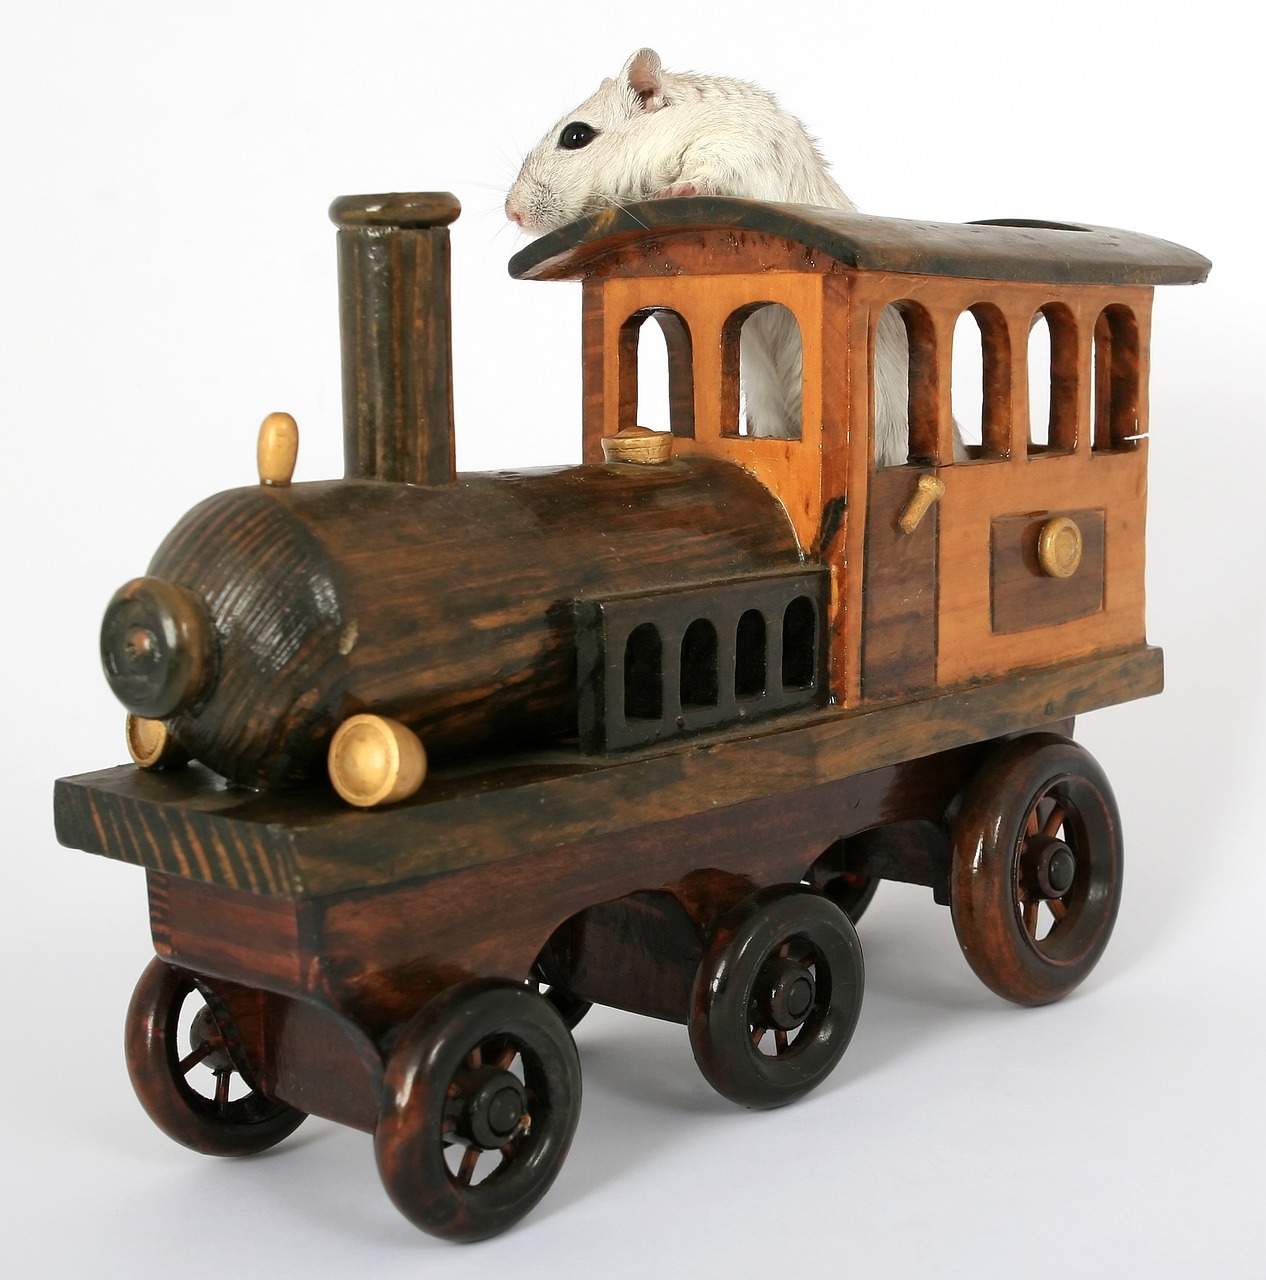 a toy train with a rat on top of it, by Rodney Joseph Burn, folk art, white steam on the side, award winning ”, benjamin vnuk